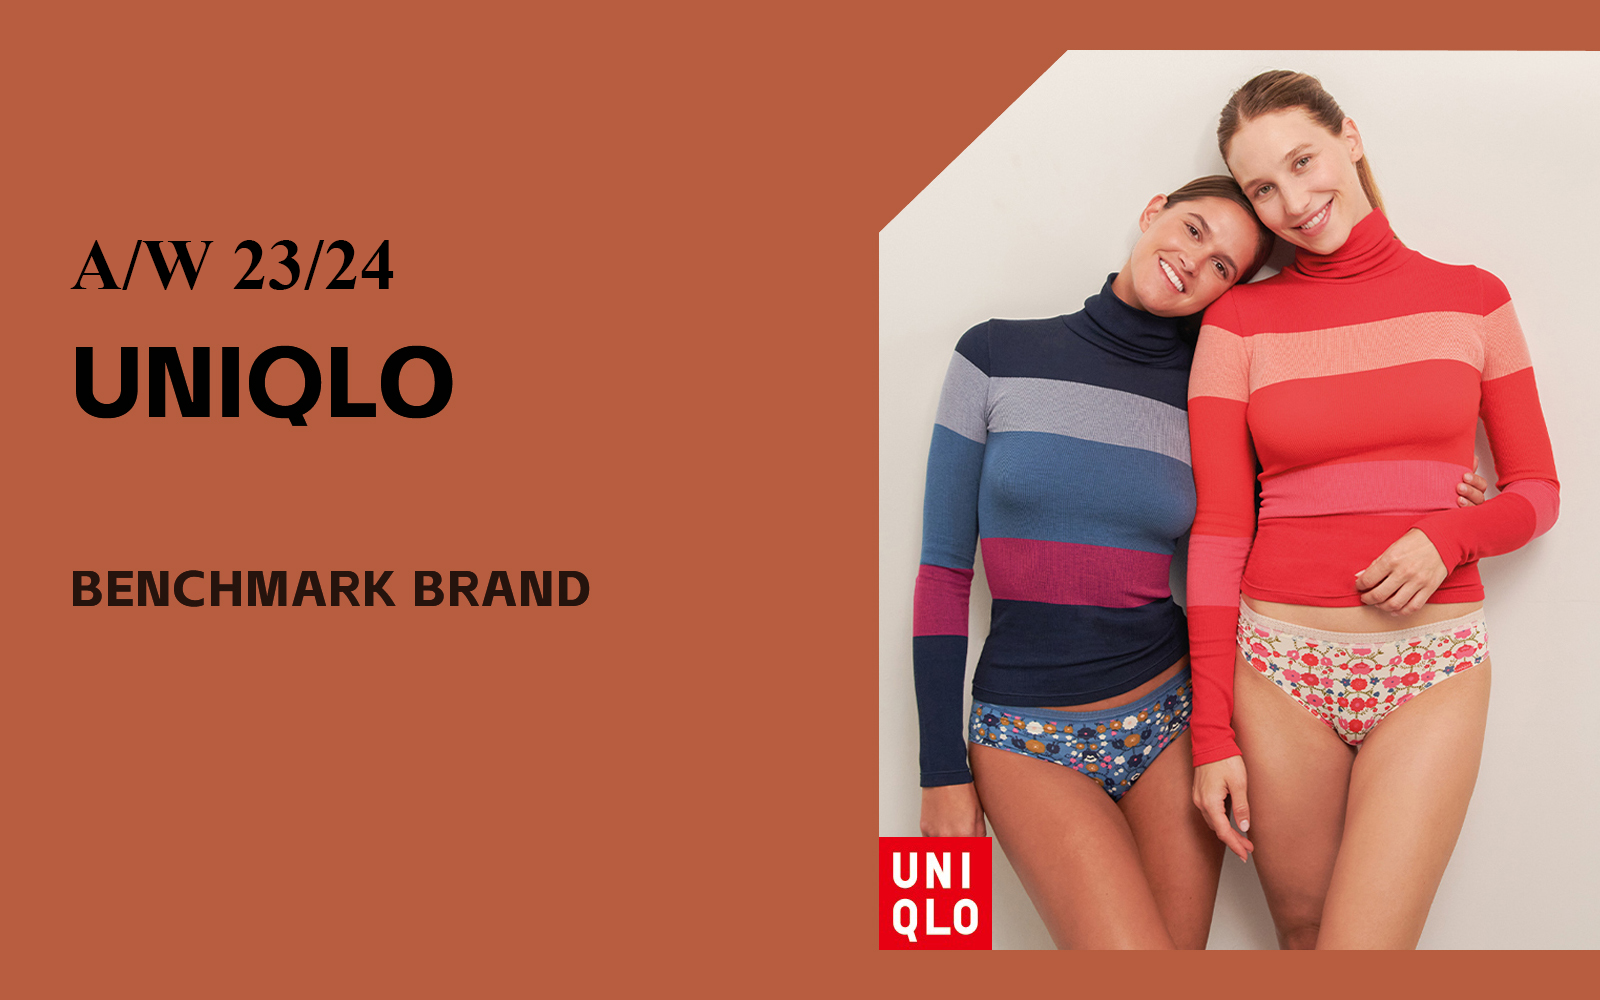 Fun Winter -- The Analysis of Uniqlo The Benchmark Women's Underwear & Homewear Brand